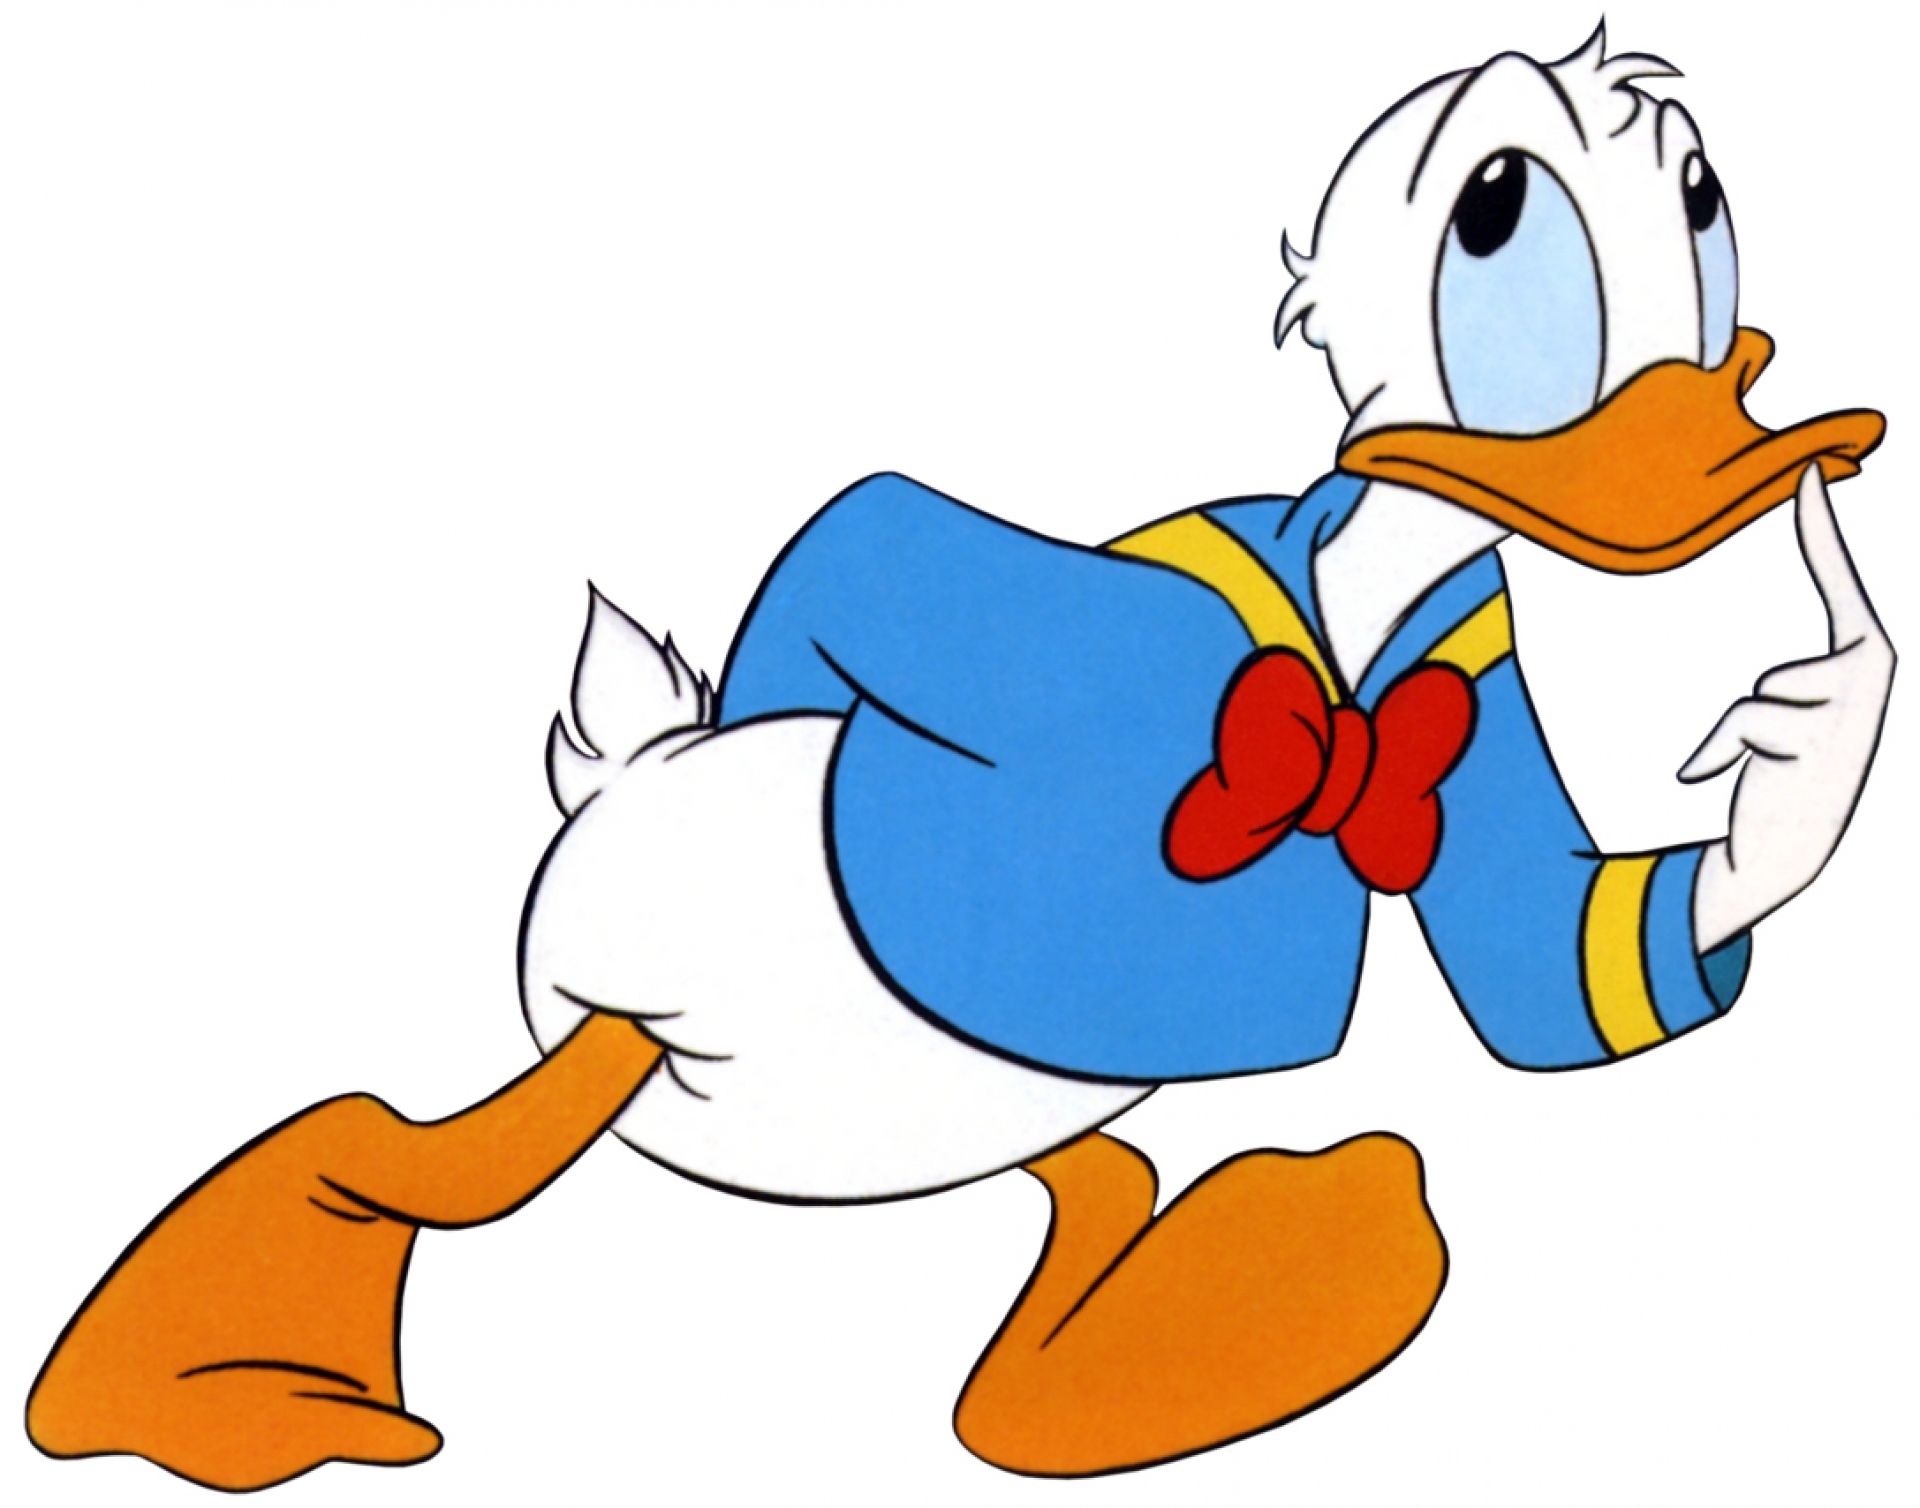 Donald Duck Cartoon Wallpaper HD For Mobile | Cartoons Images